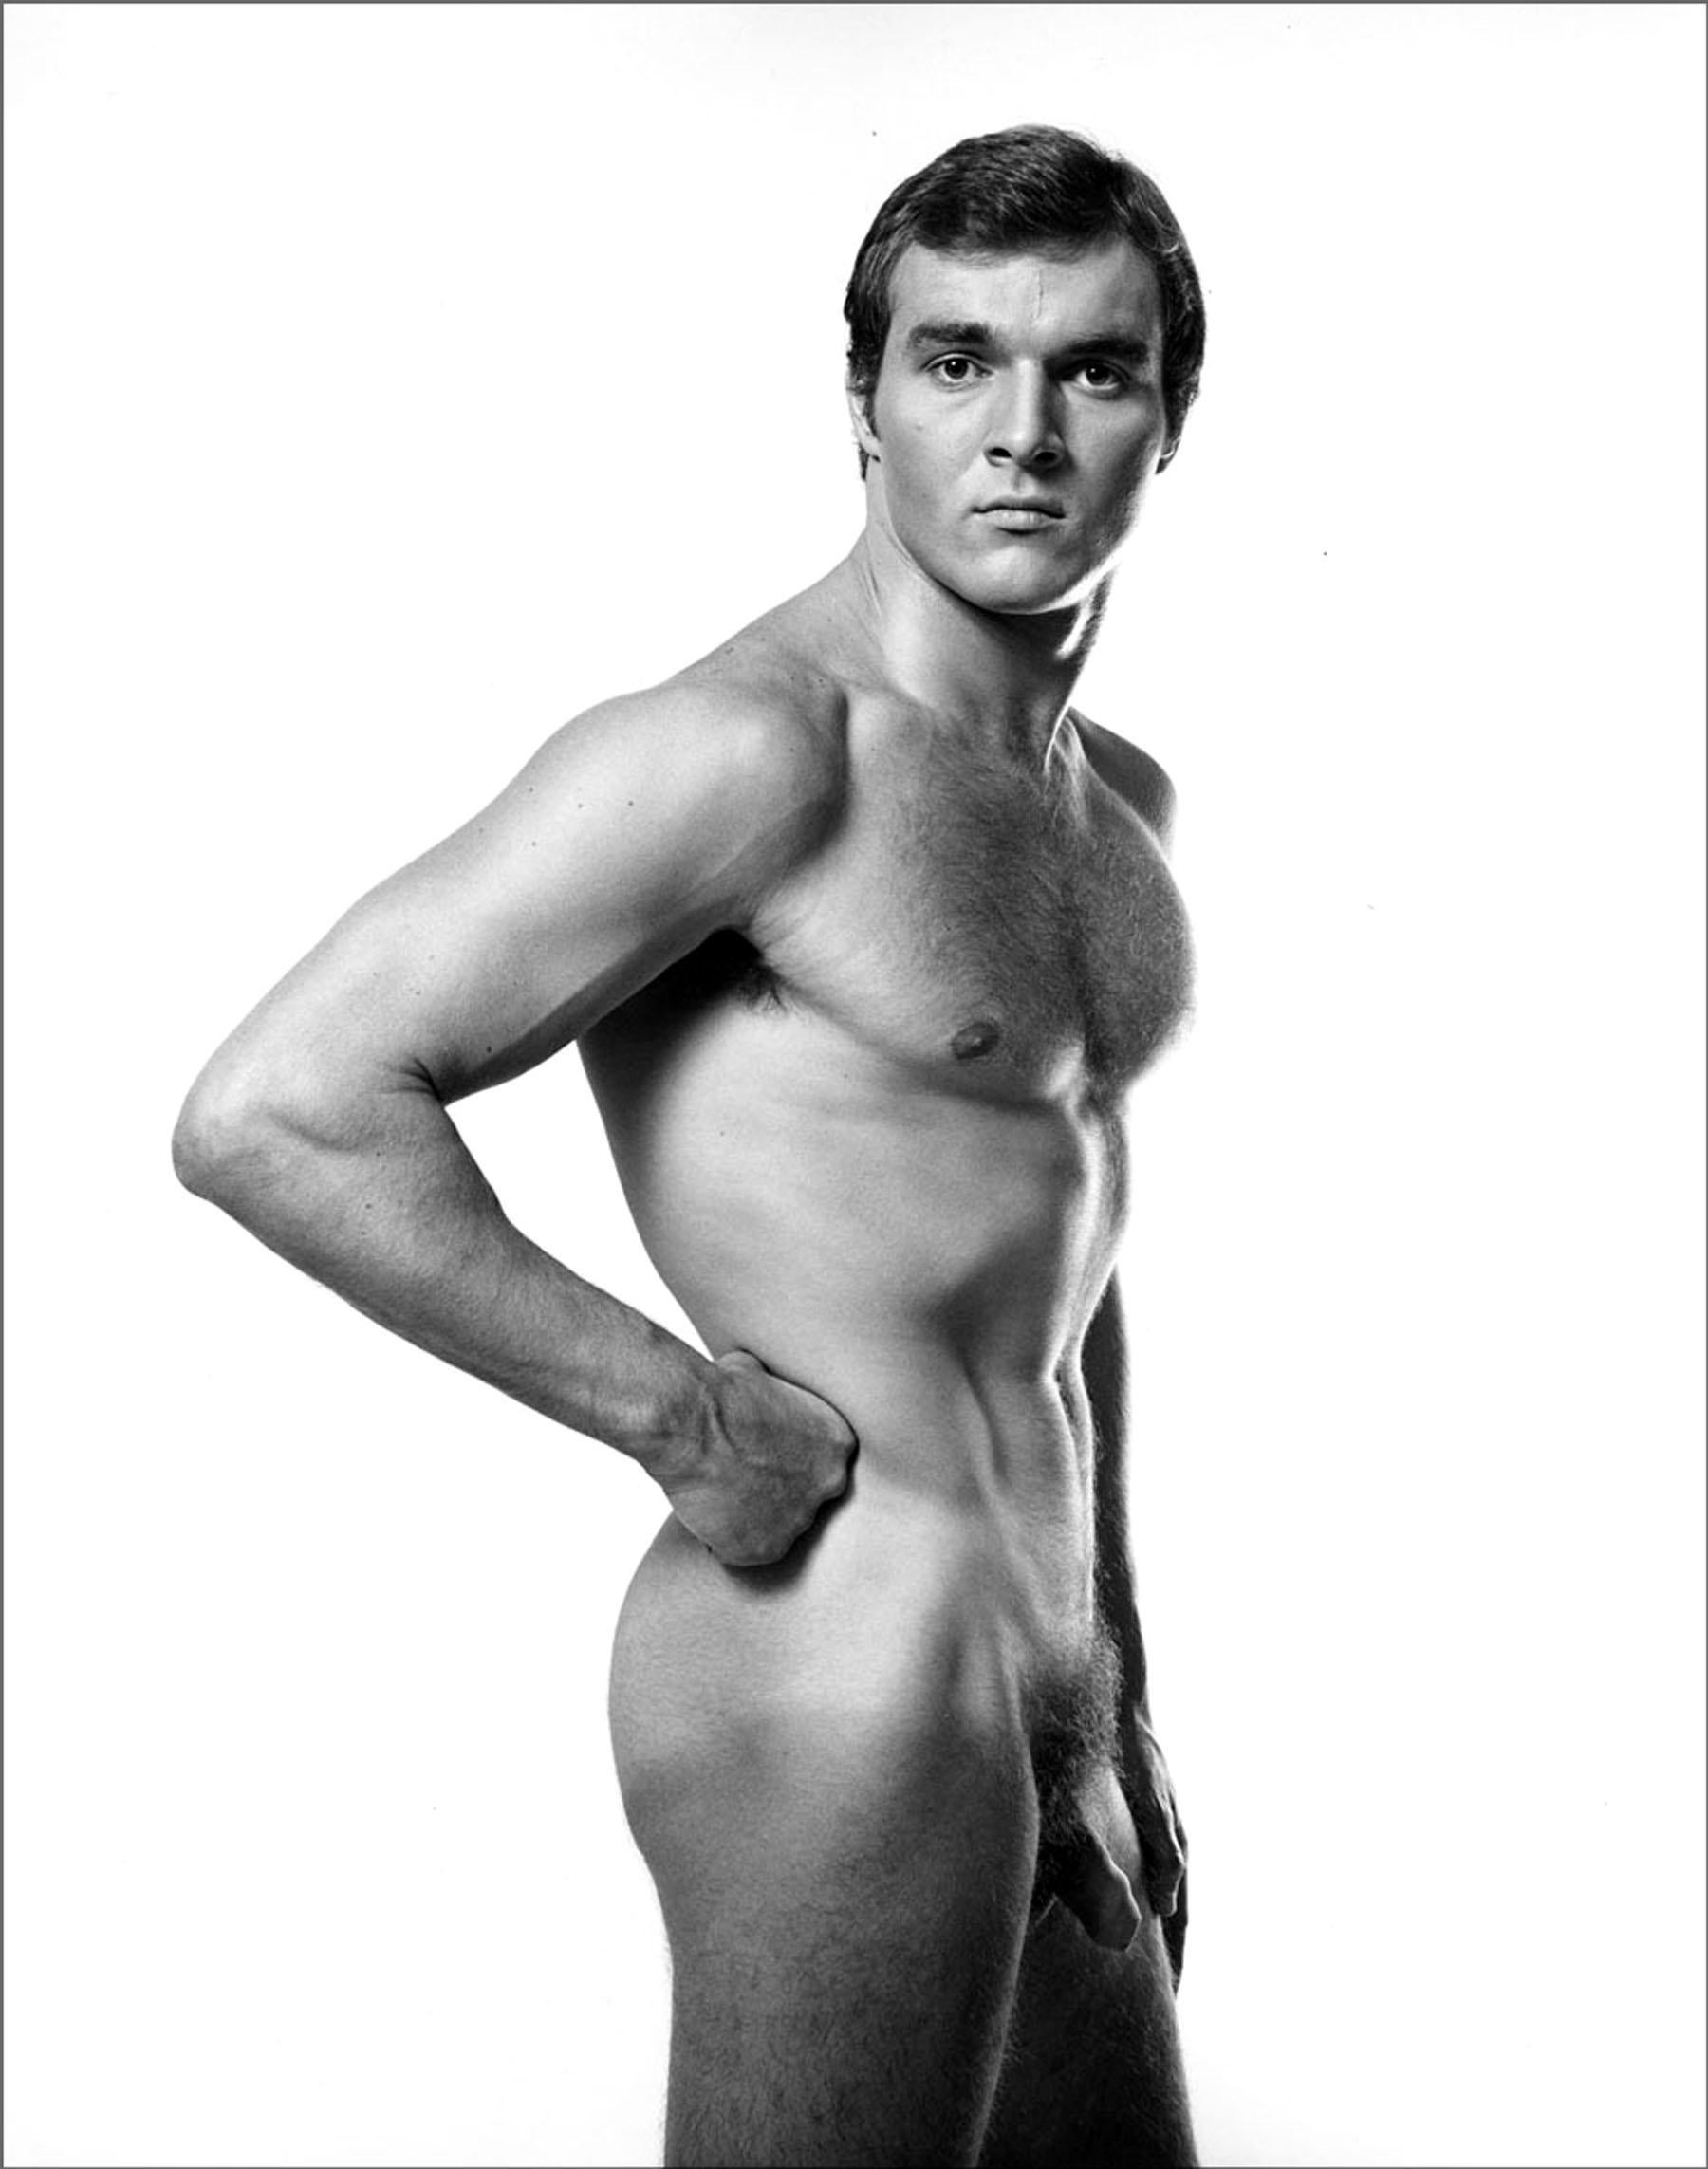 Swimmer/Athlete George Krasowski, Photographed Nude for After Dark Magazine